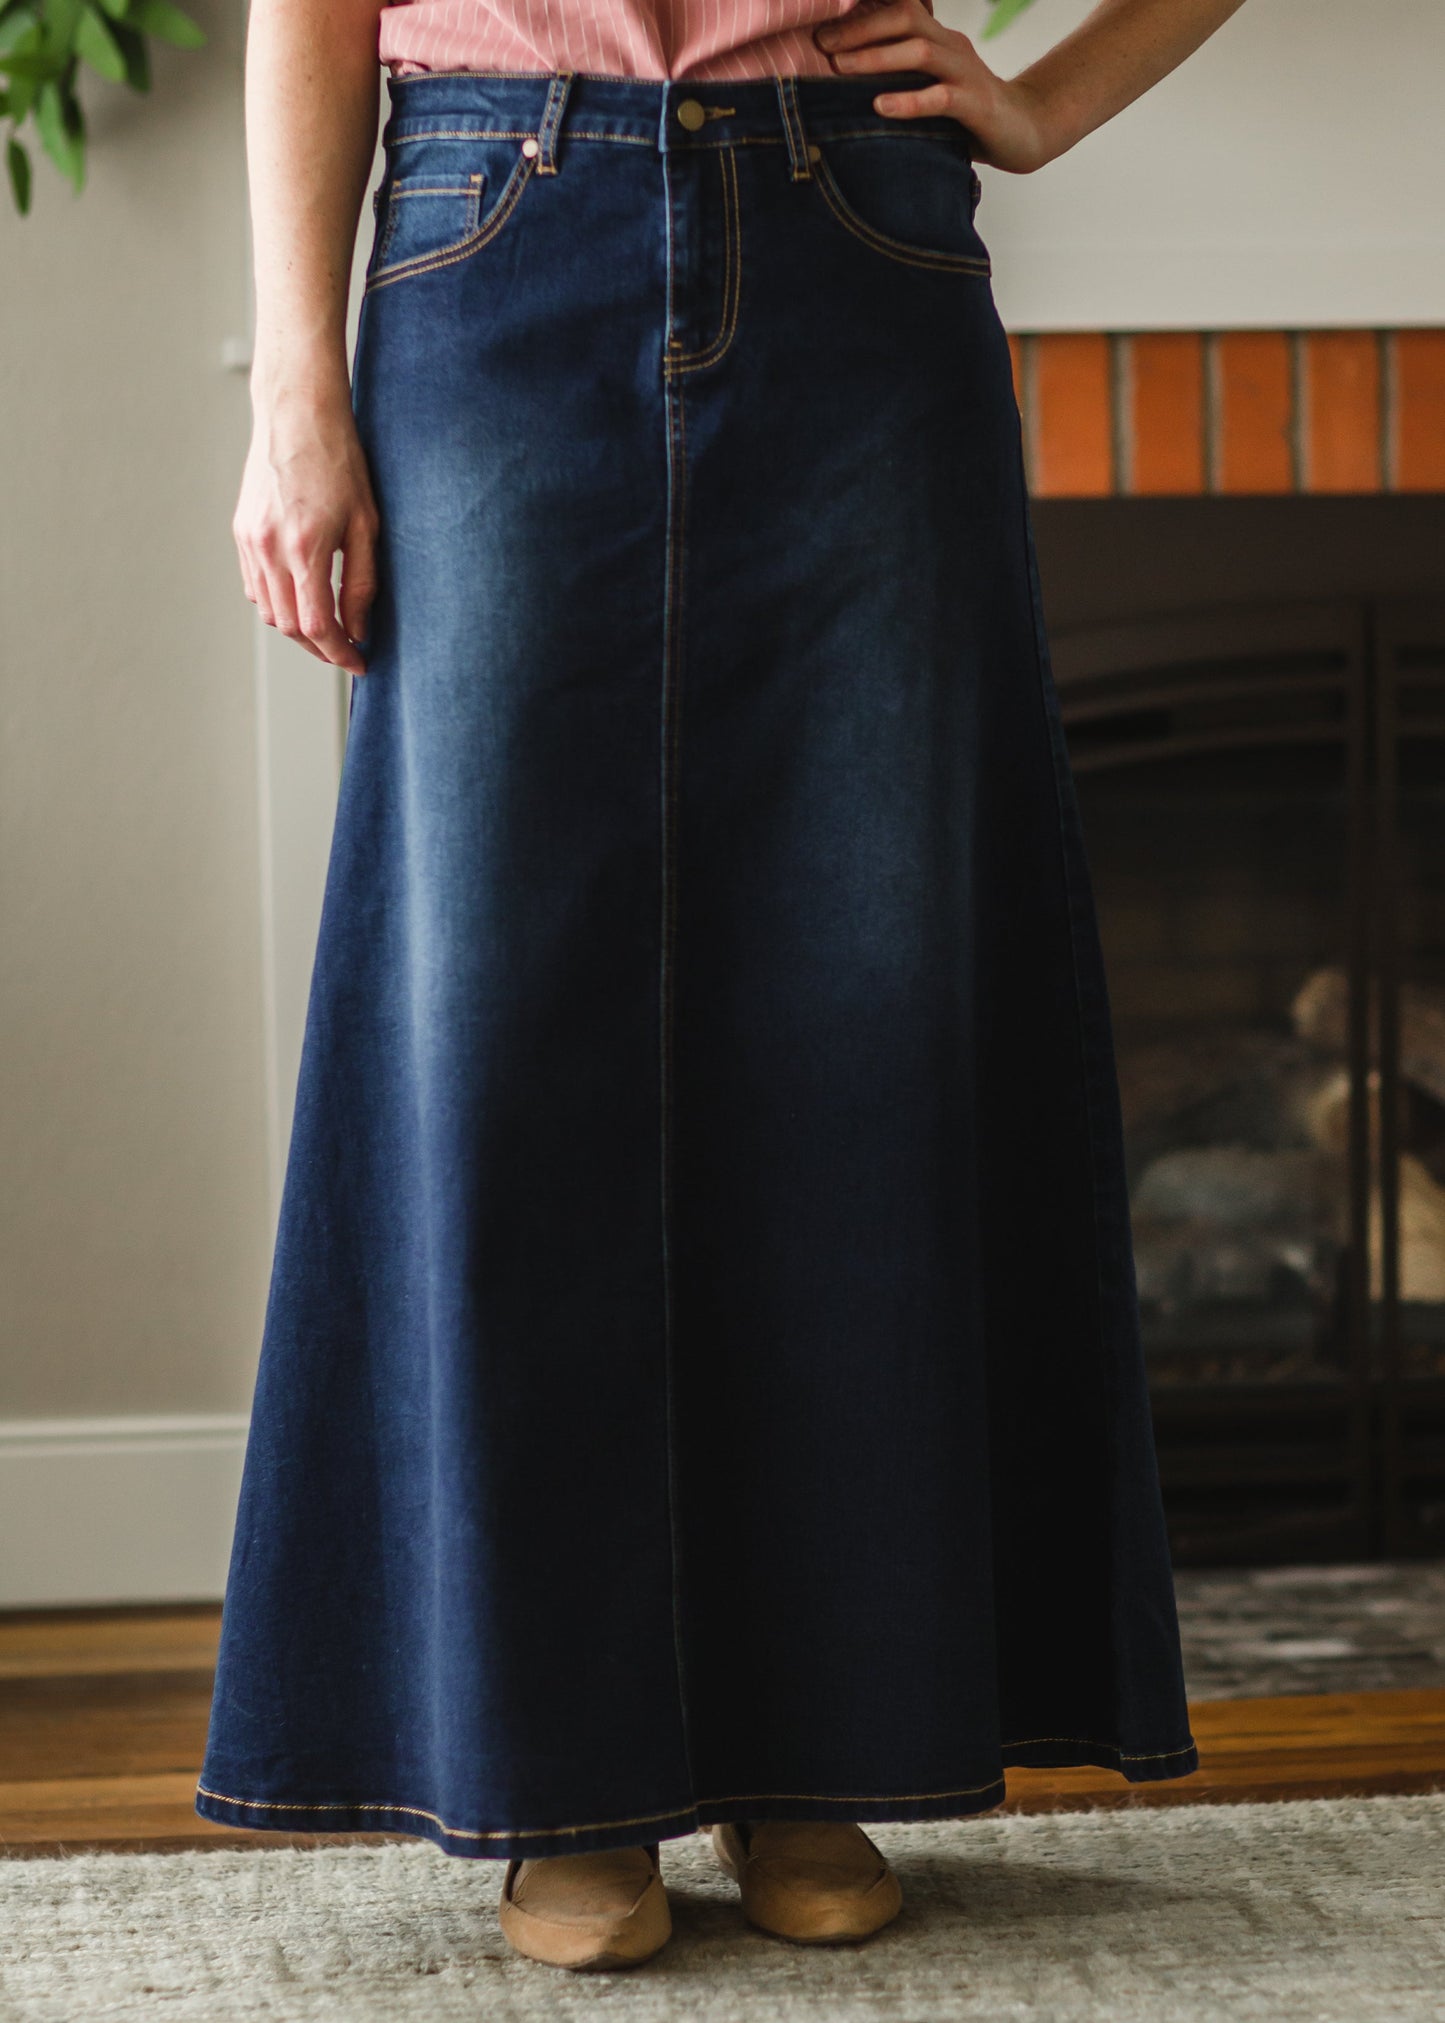 Bethany Dark A-Line Long Denim Skirt - FINAL SALE Skirts